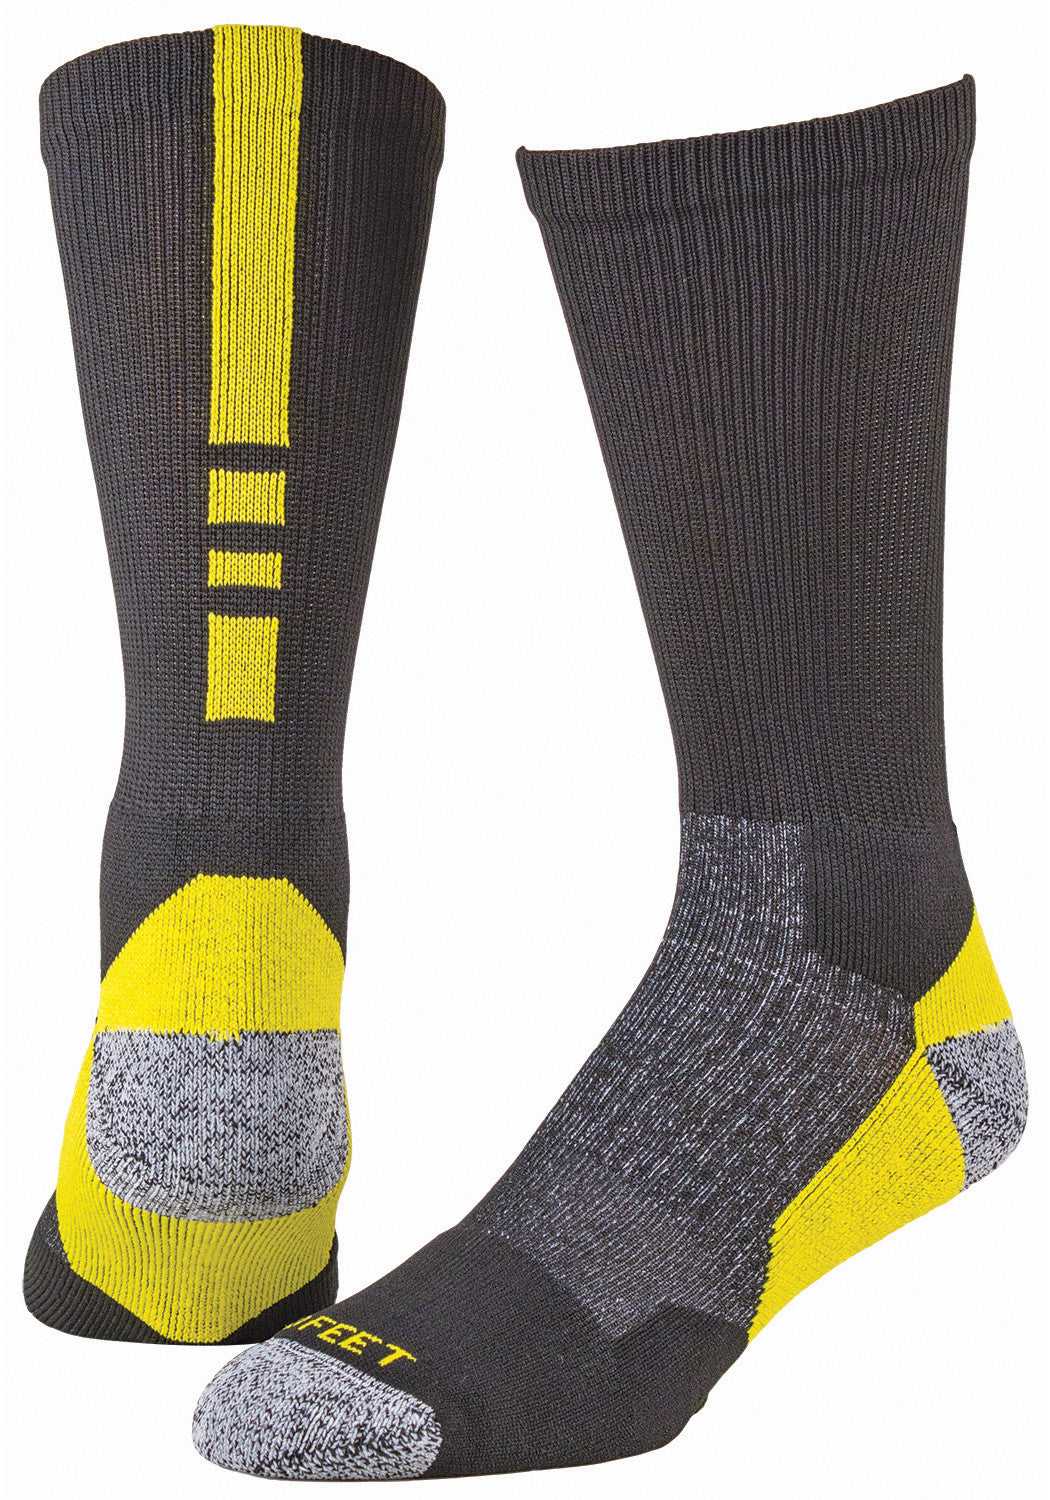 Pro Feet 238 Pro Feet Performance Shooter 2.0 Socks - Black Neon Yellow - HIT a Double